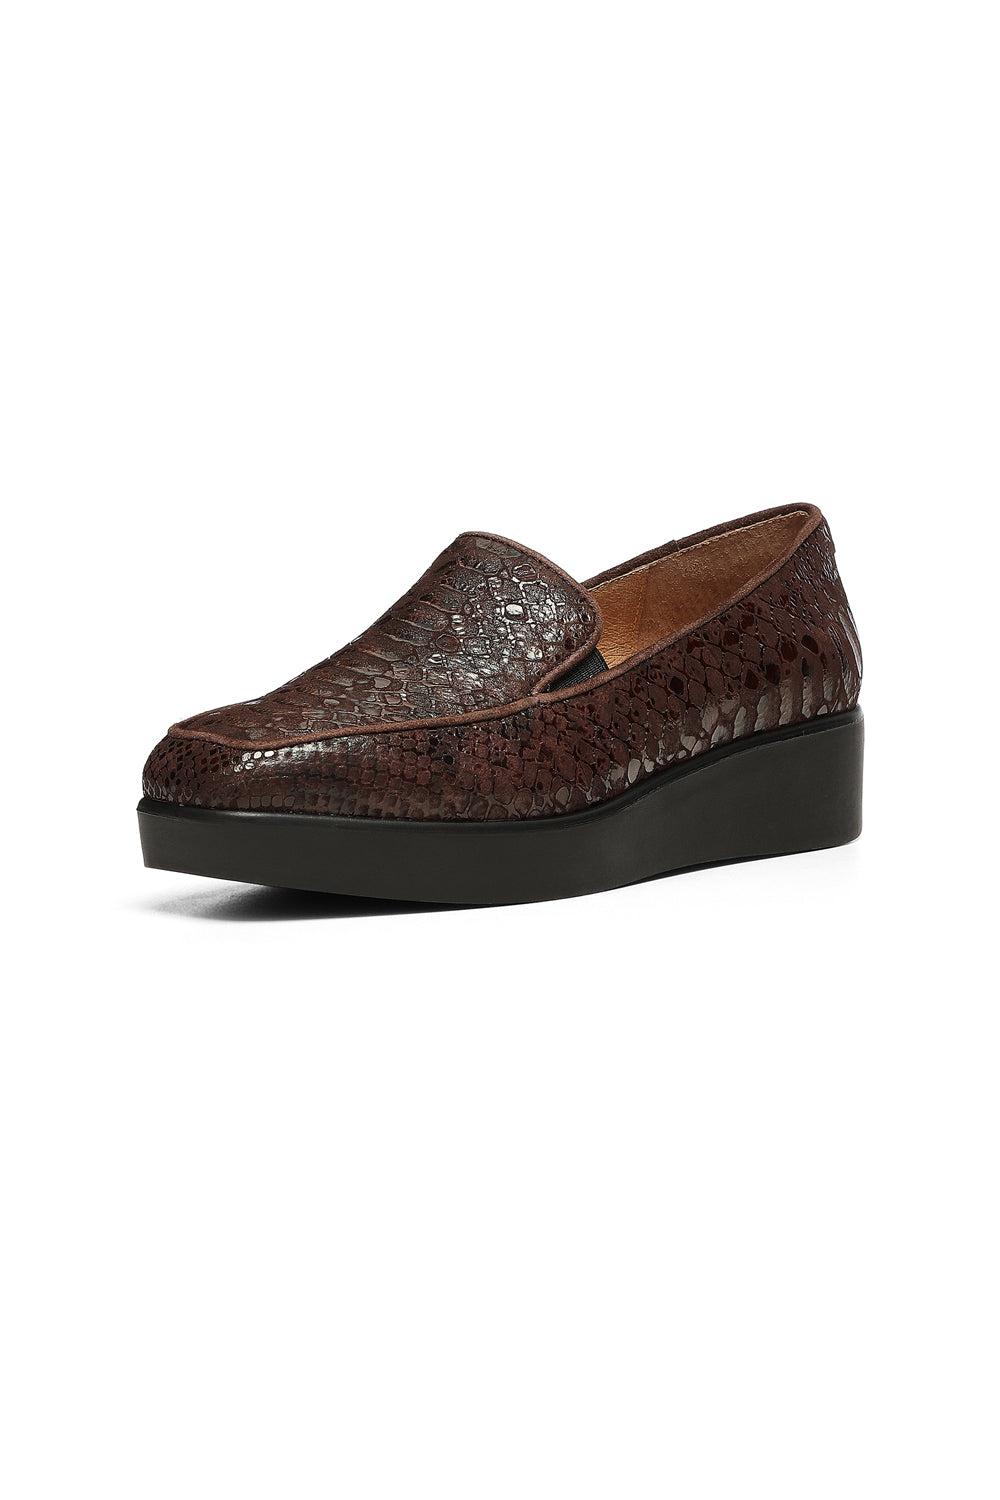 NYDJ Gira Slip-On Loafers In Python Print Leather - Espresso